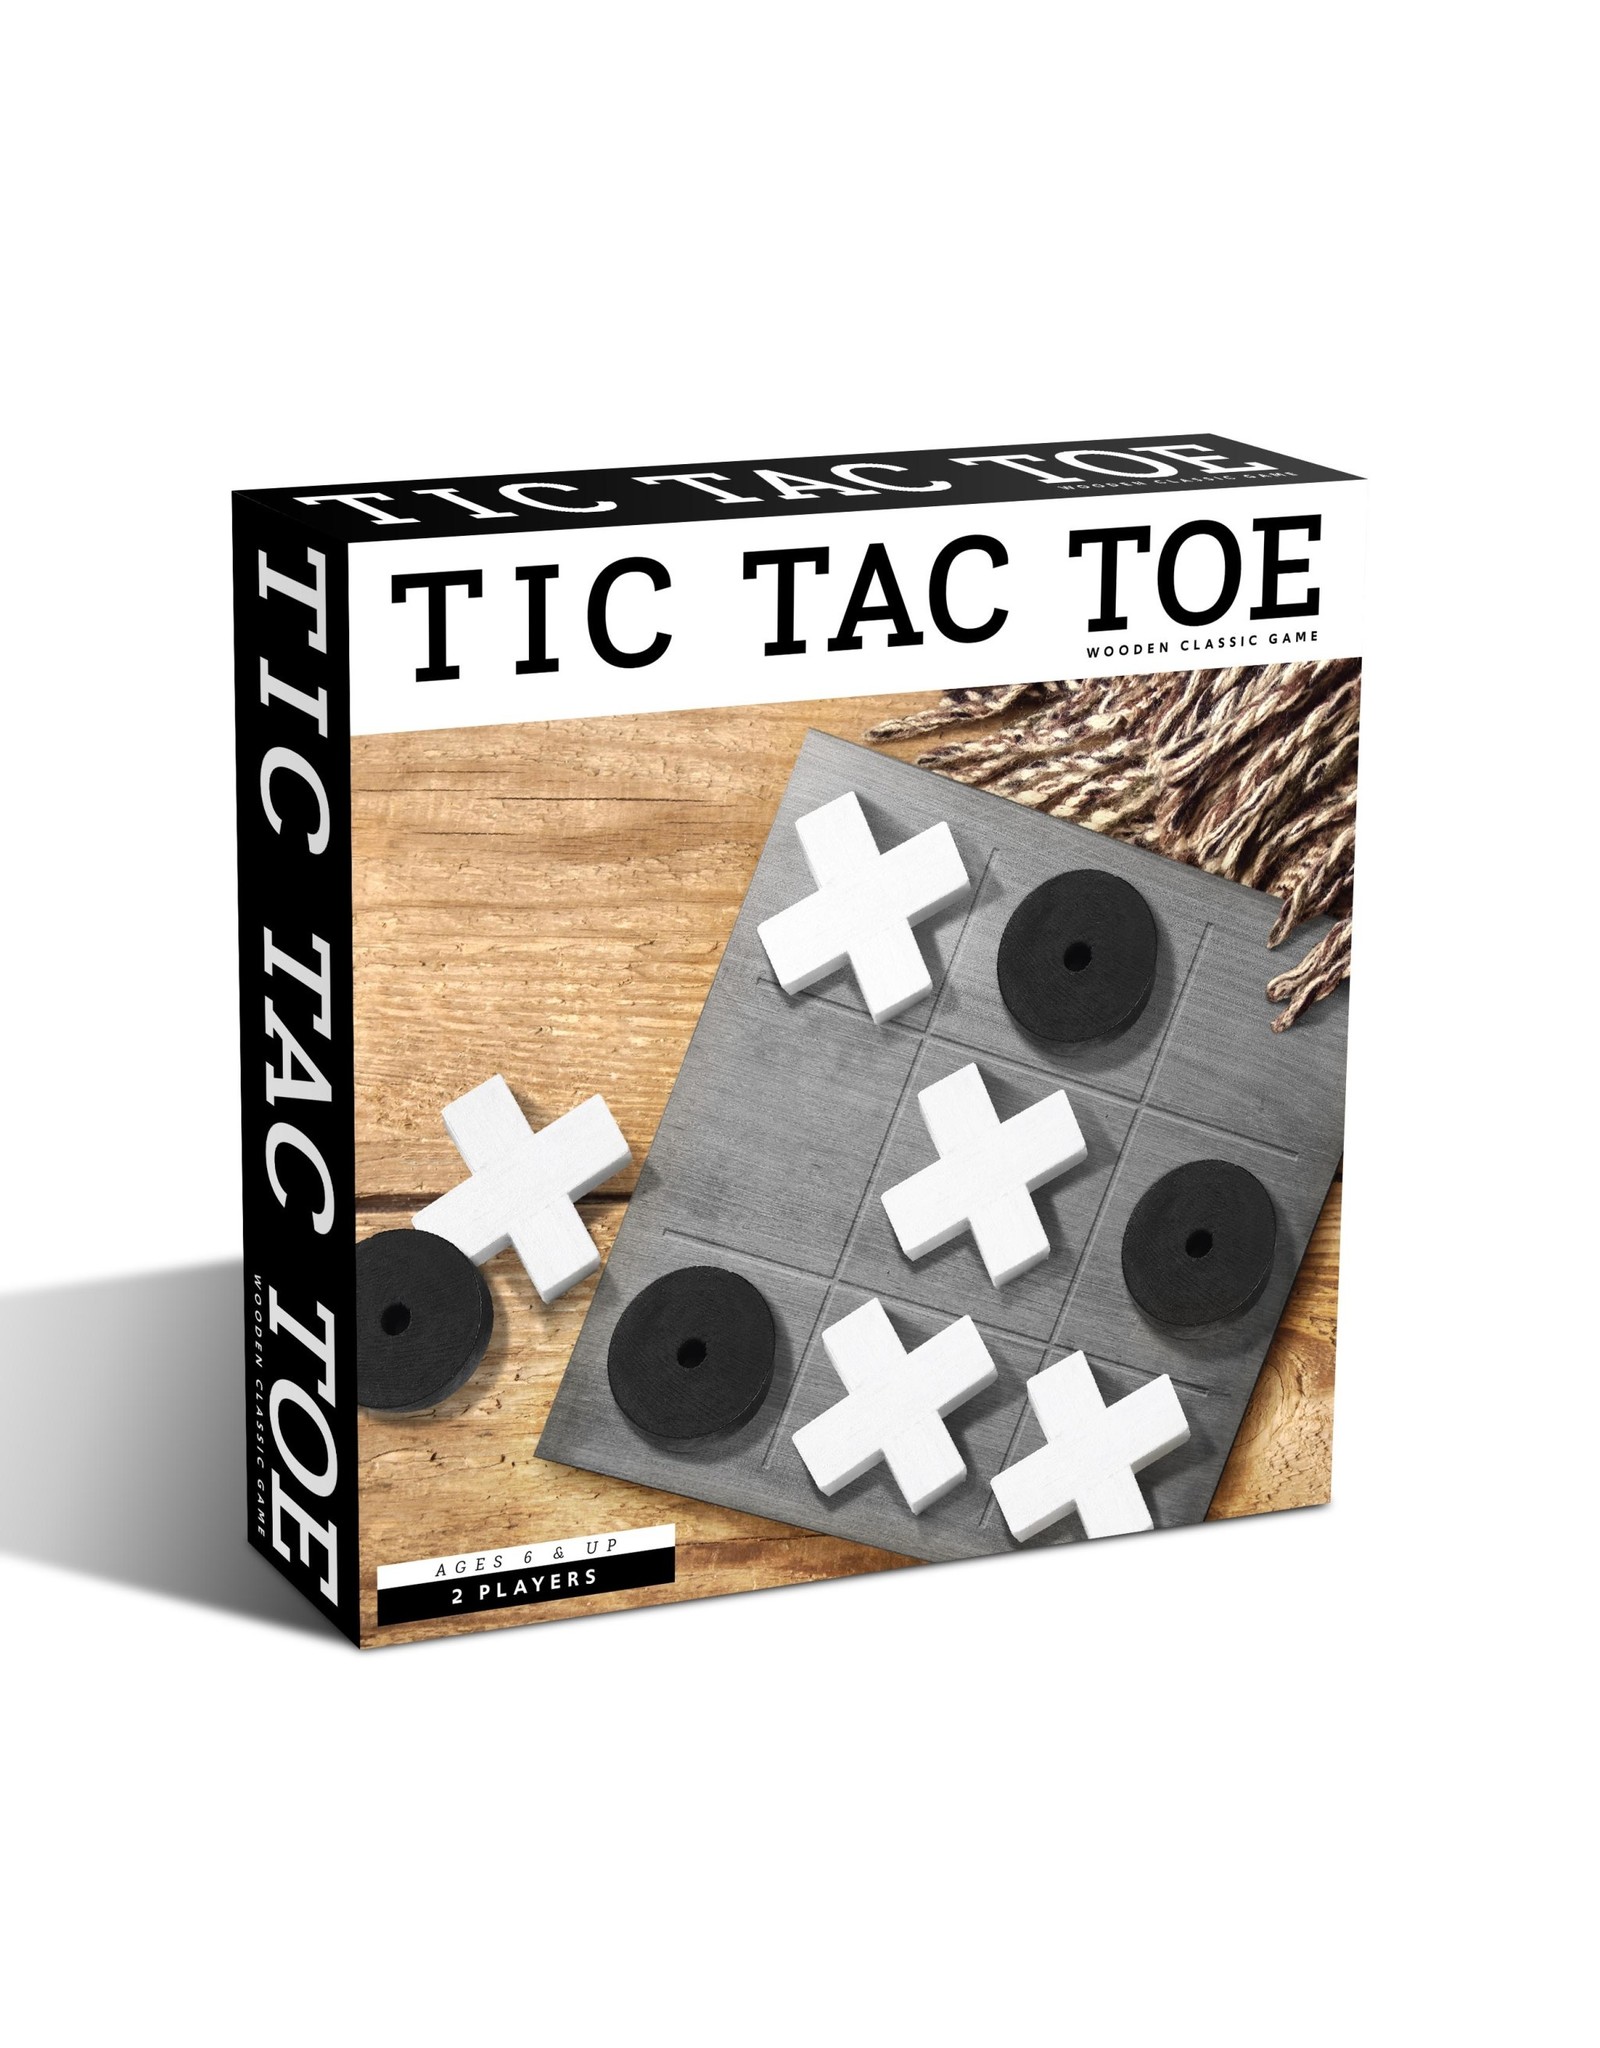 anker Tic Tac Toe Wooden Game Set